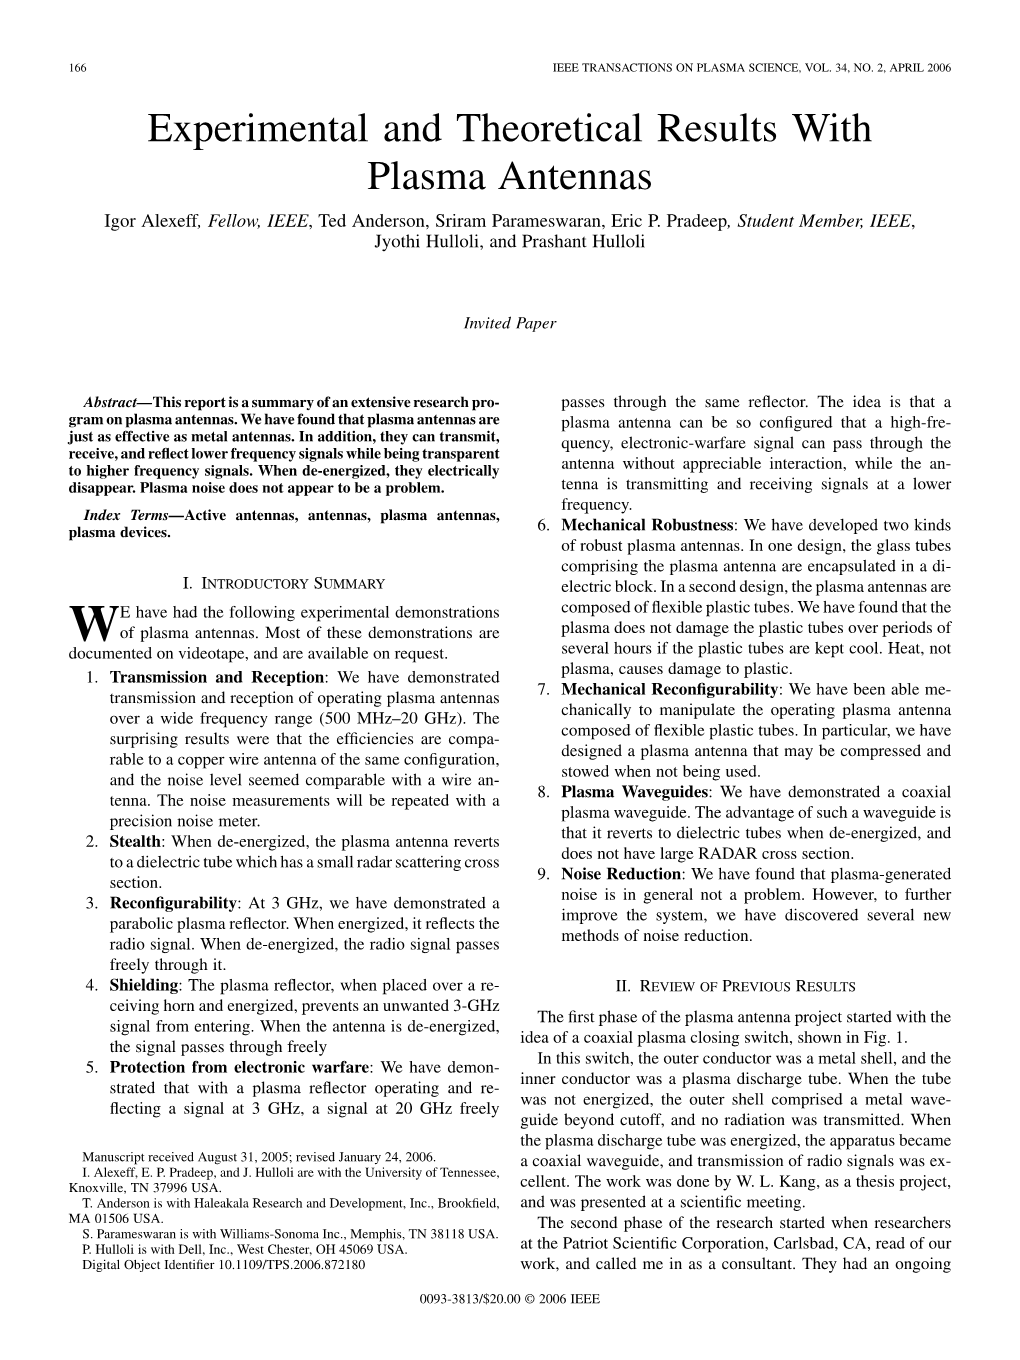 Experimental and Theoretical Results with Plasma Antennas Igor Alexeff, Fellow, IEEE, Ted Anderson, Sriram Parameswaran, Eric P